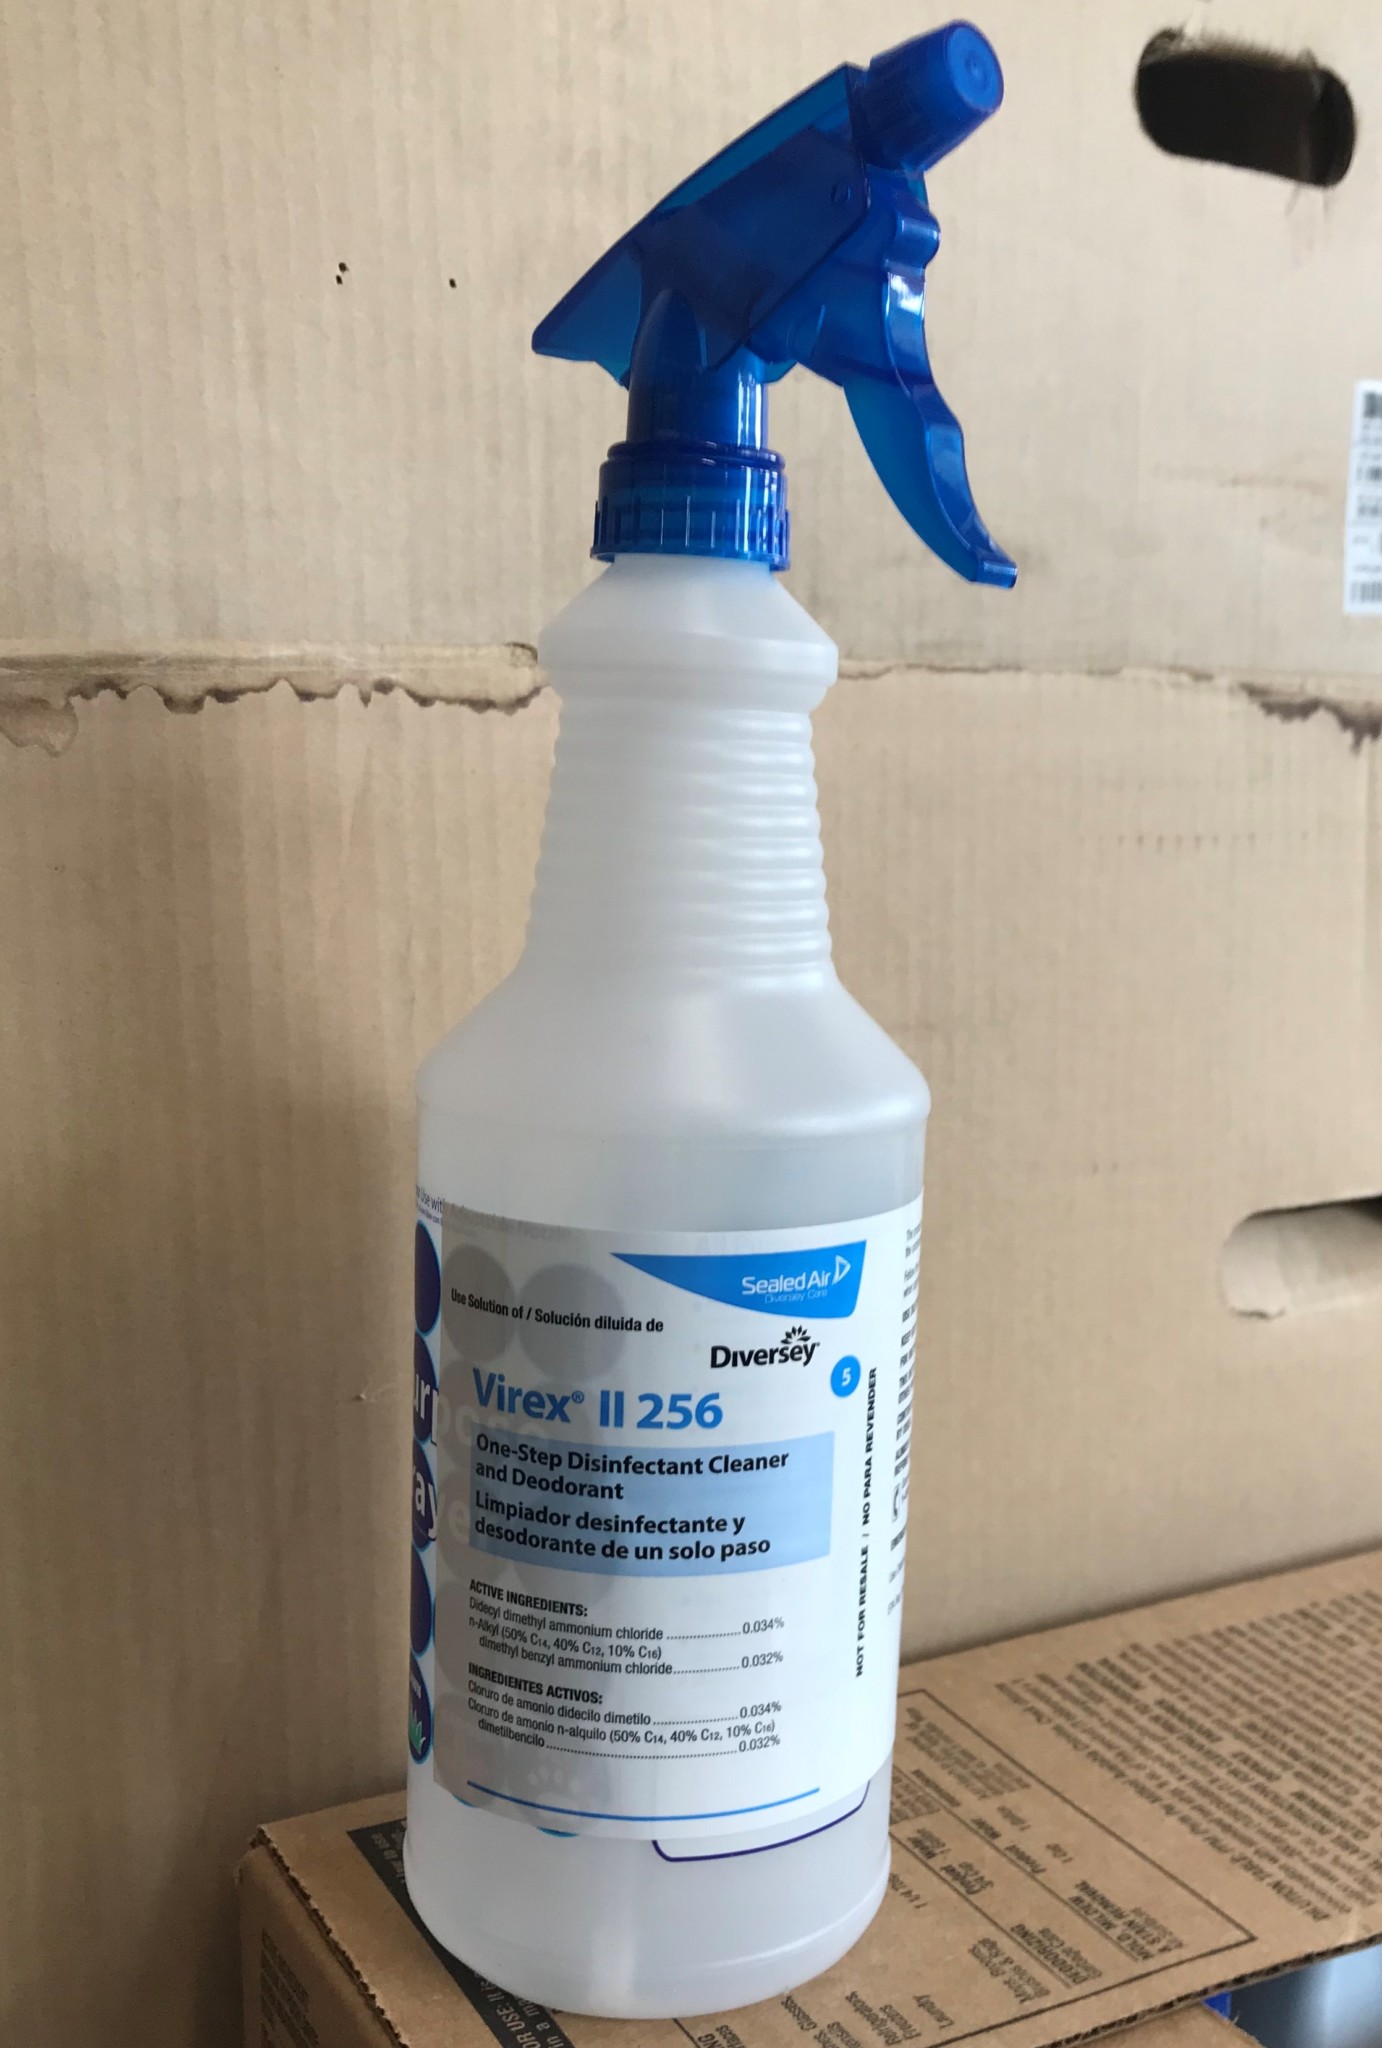 Virex Spray Disinfectant